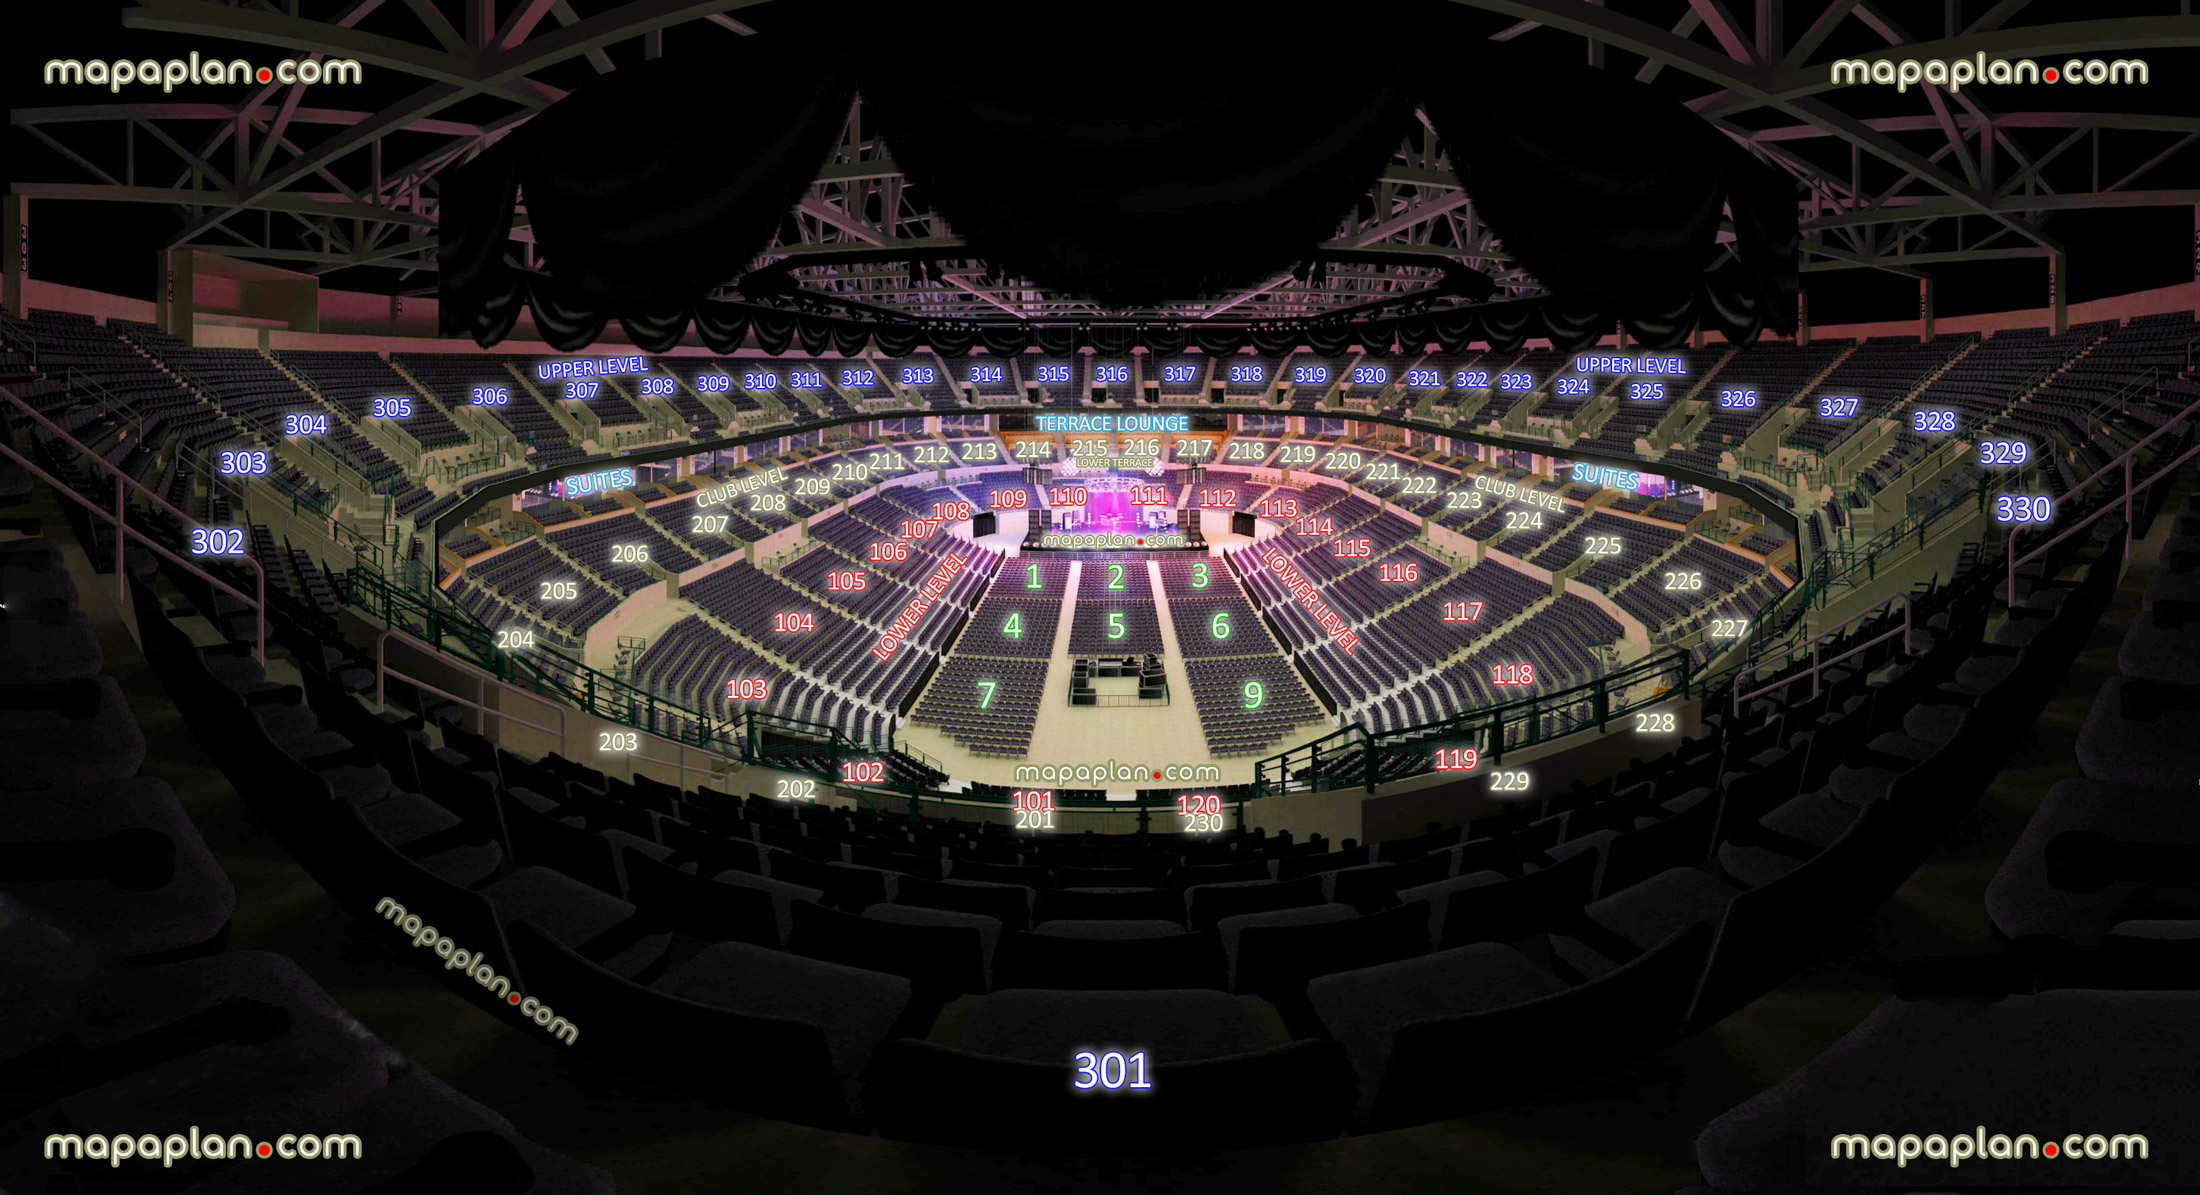 Rogers Arena Virtual Seating Chart